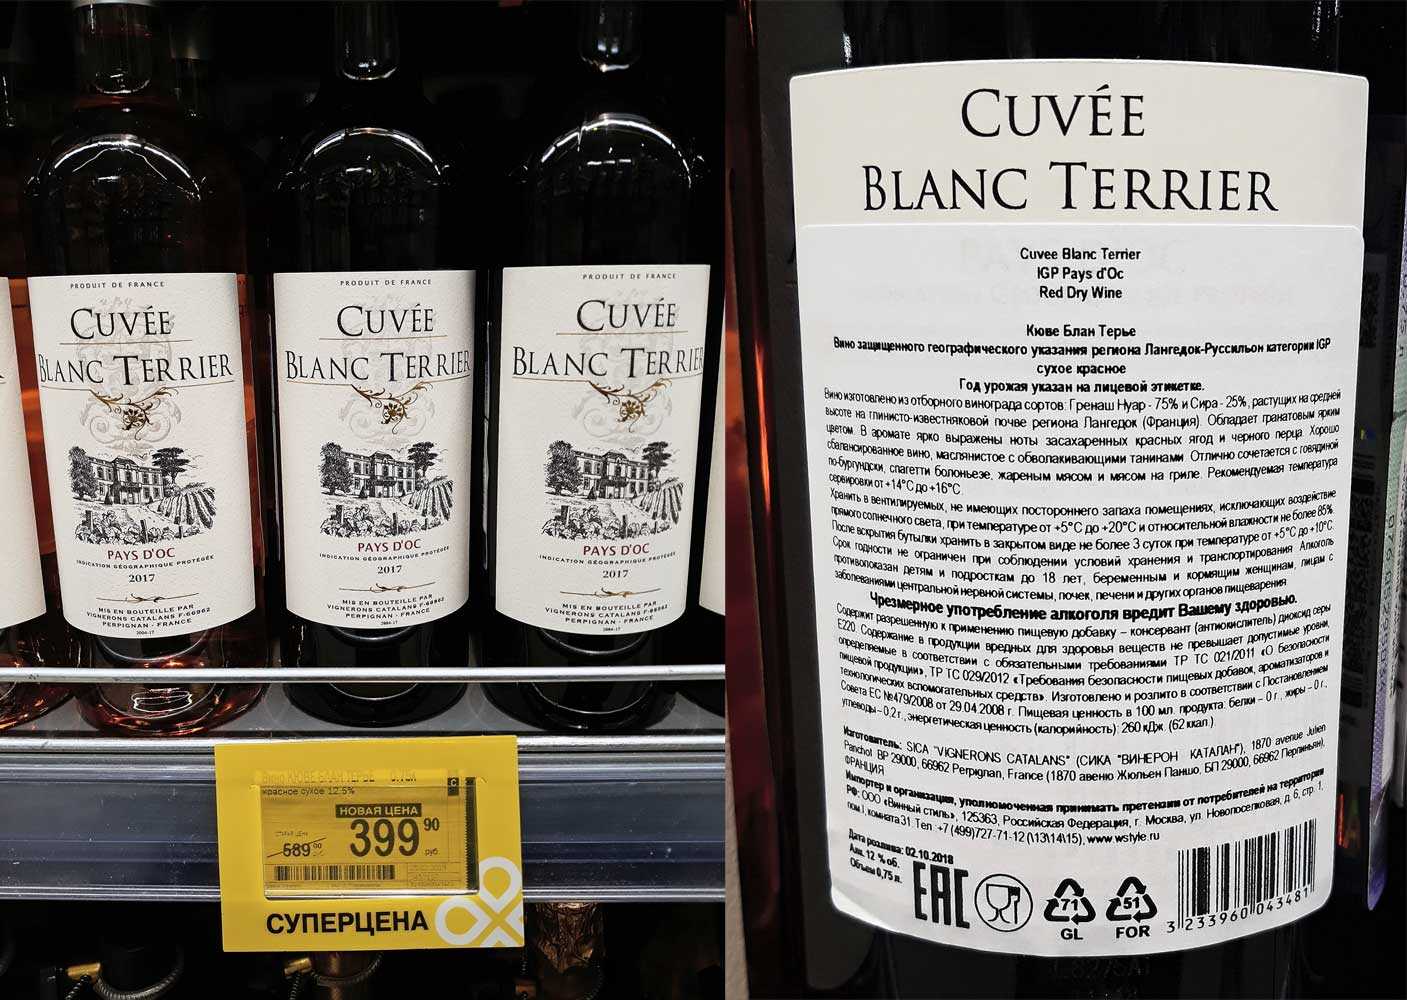 Вино cuvee (кюве) – четыре трактовки термина на этикетке